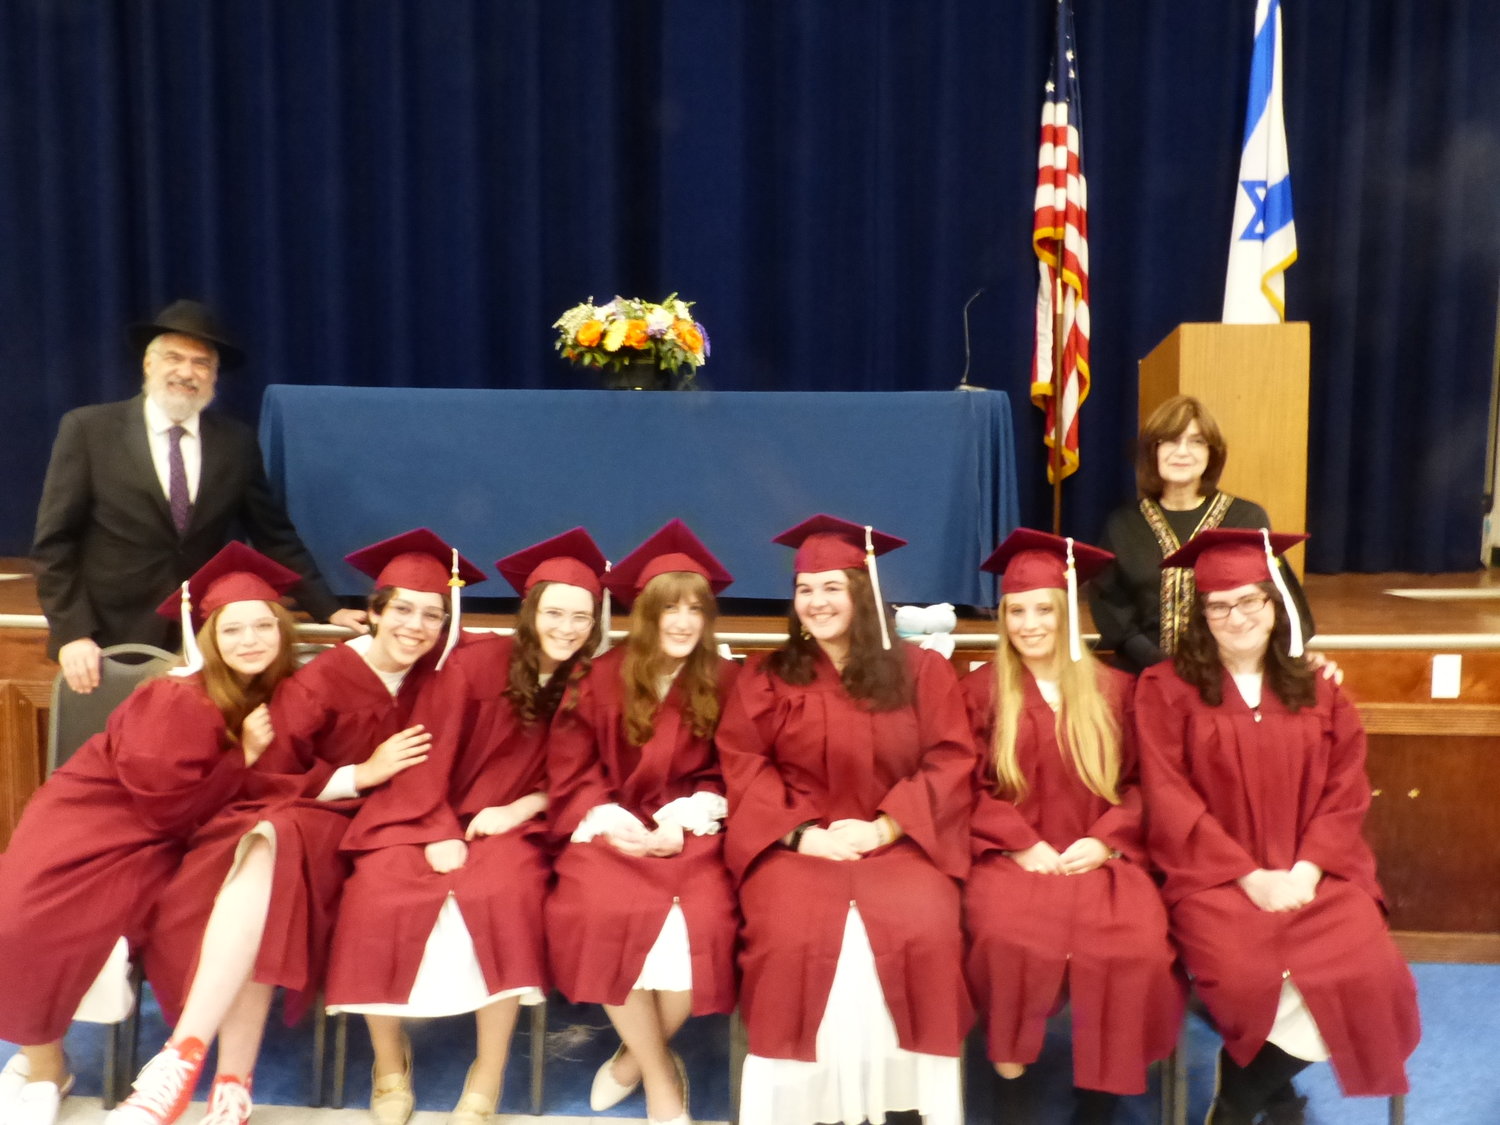 New England Academy of Torah (NEAT) graduates at their graduation on June 12.